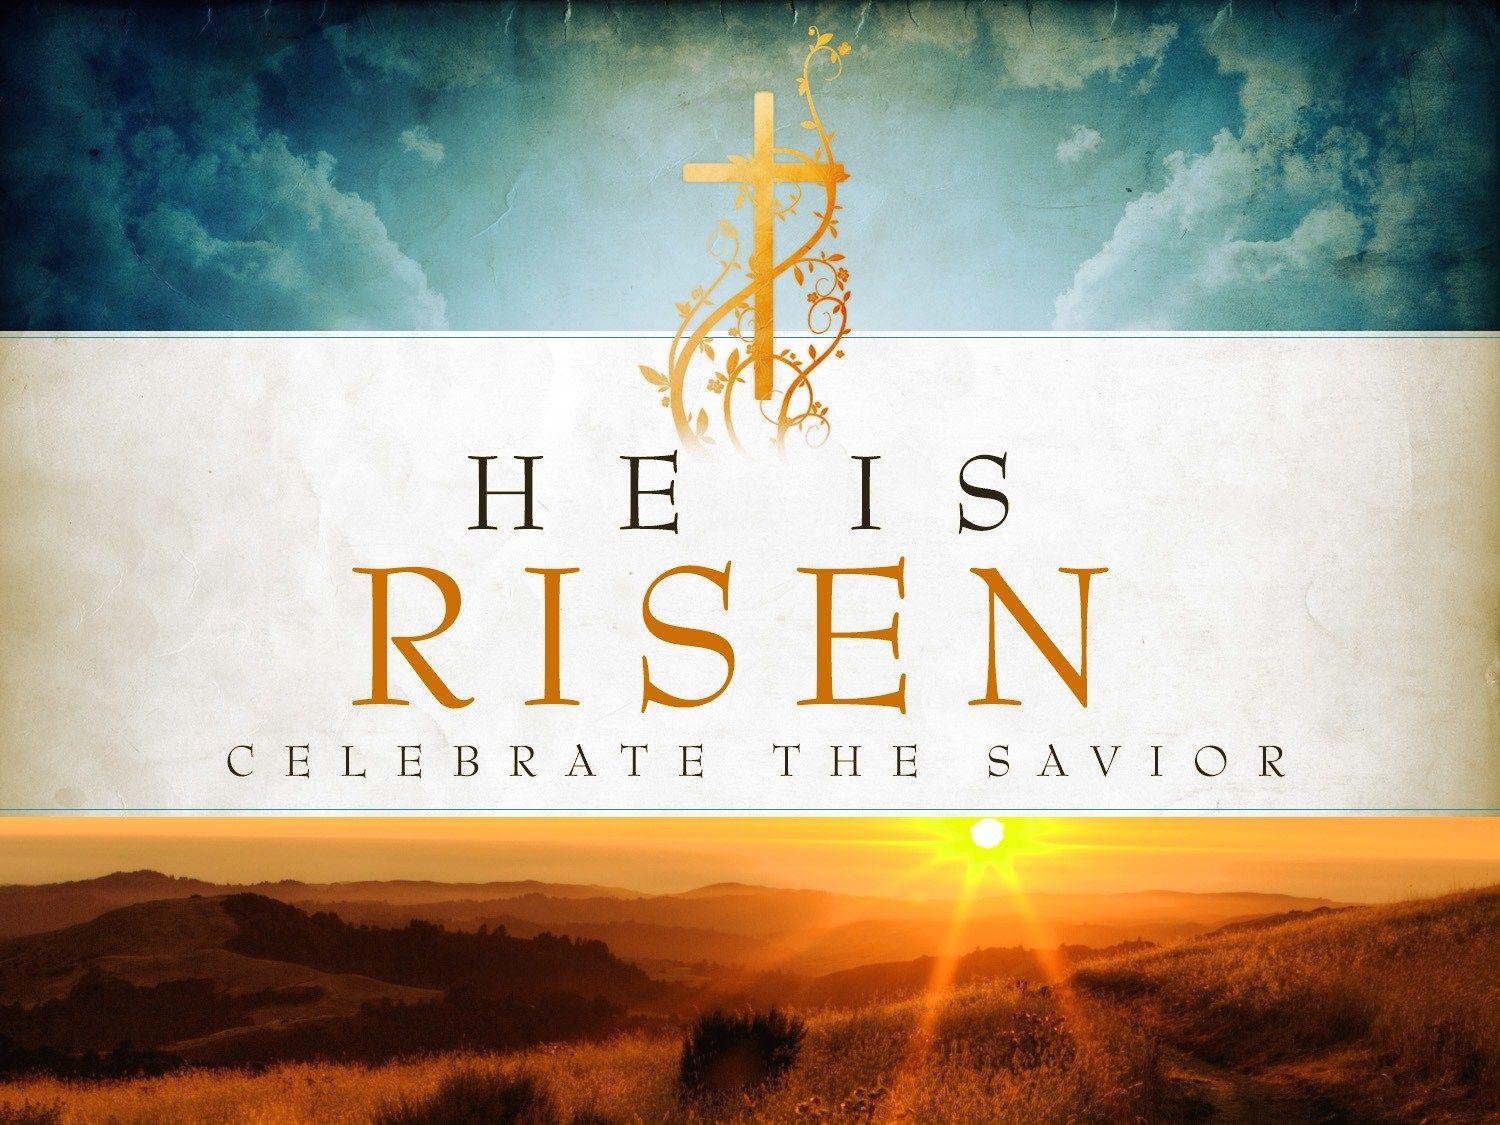 Easter Desktop Wallpaper Free Download. Jesus is risen, Easter